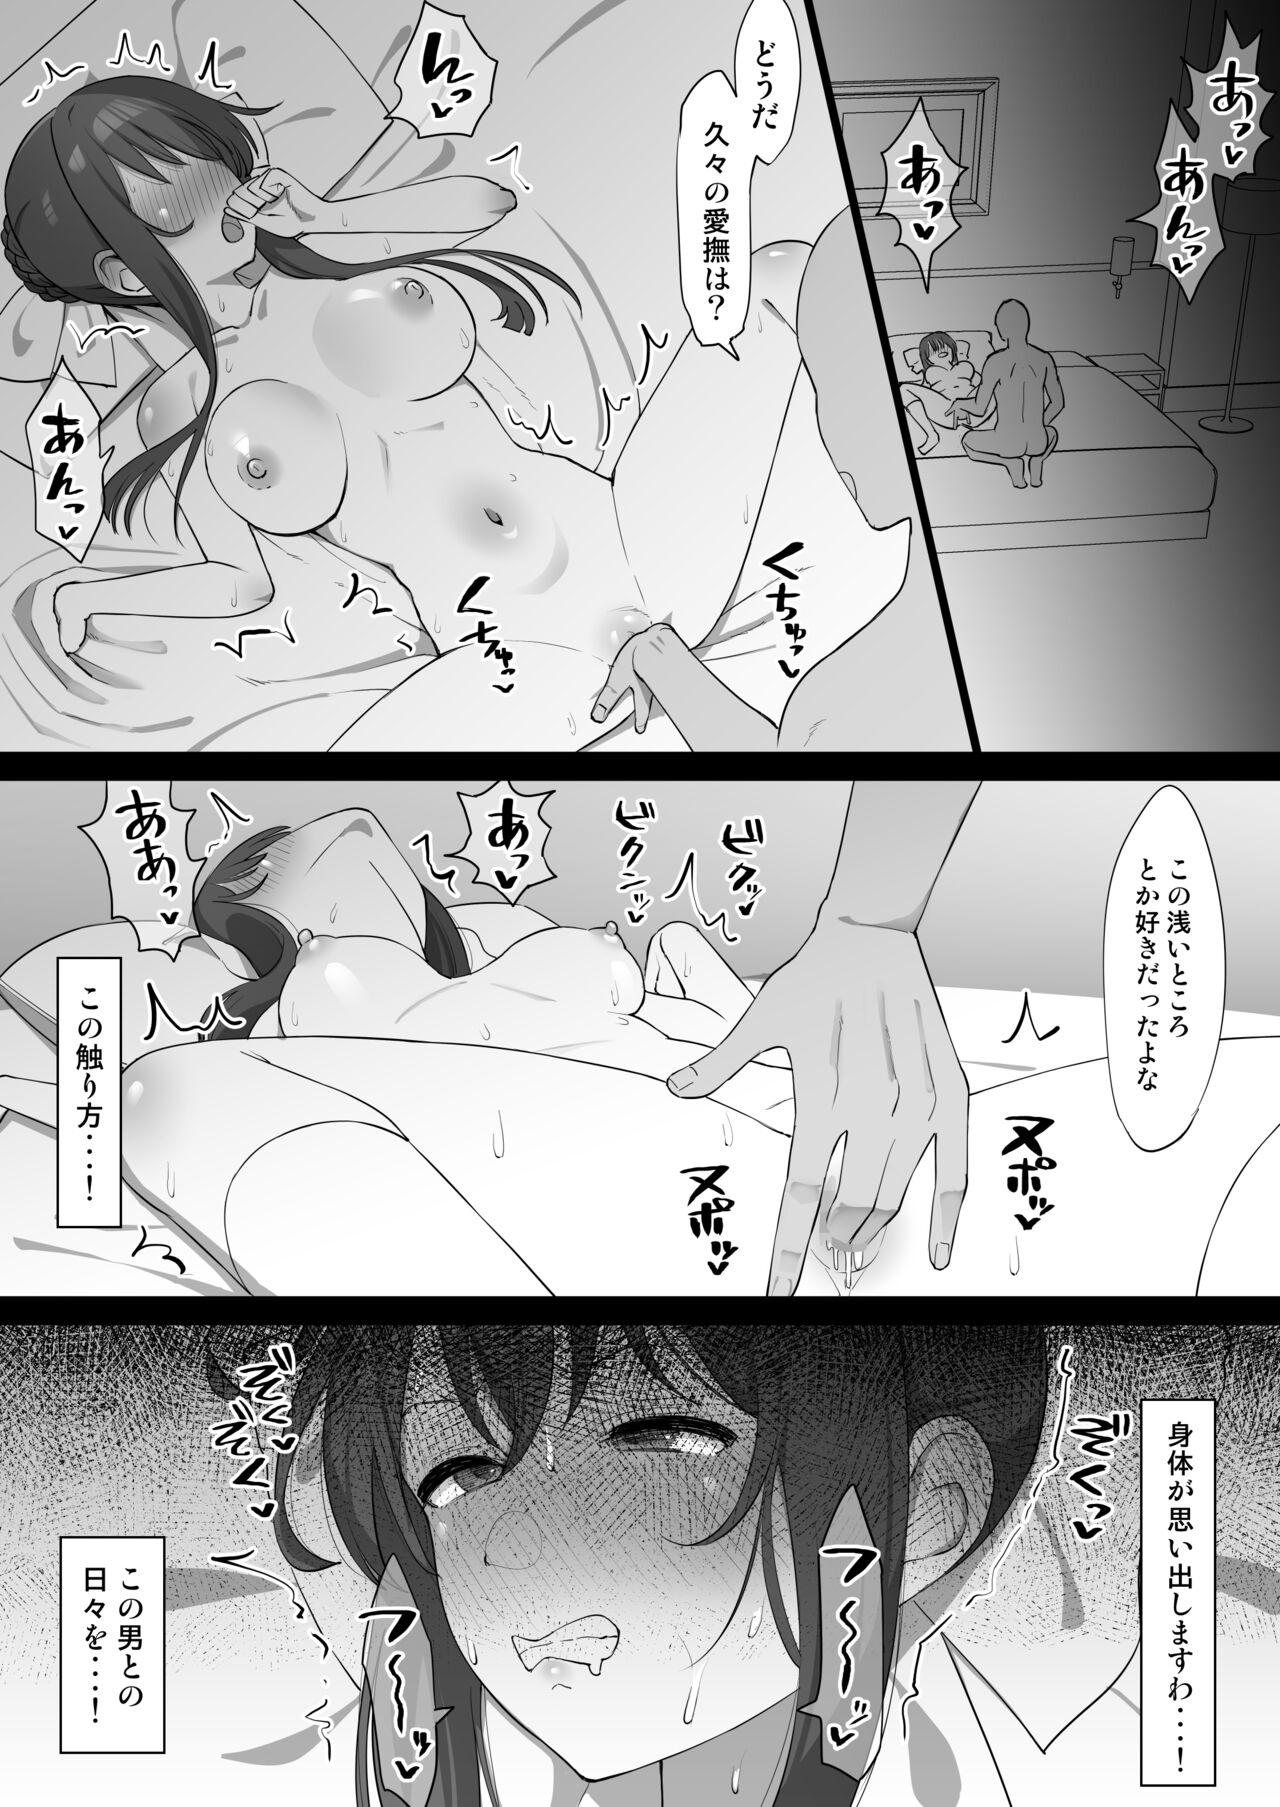 Kiss Tamao ga Otoko to Hisashiburi ni Ecchi suru Manga - Strawberry panic Dominant - Page 2